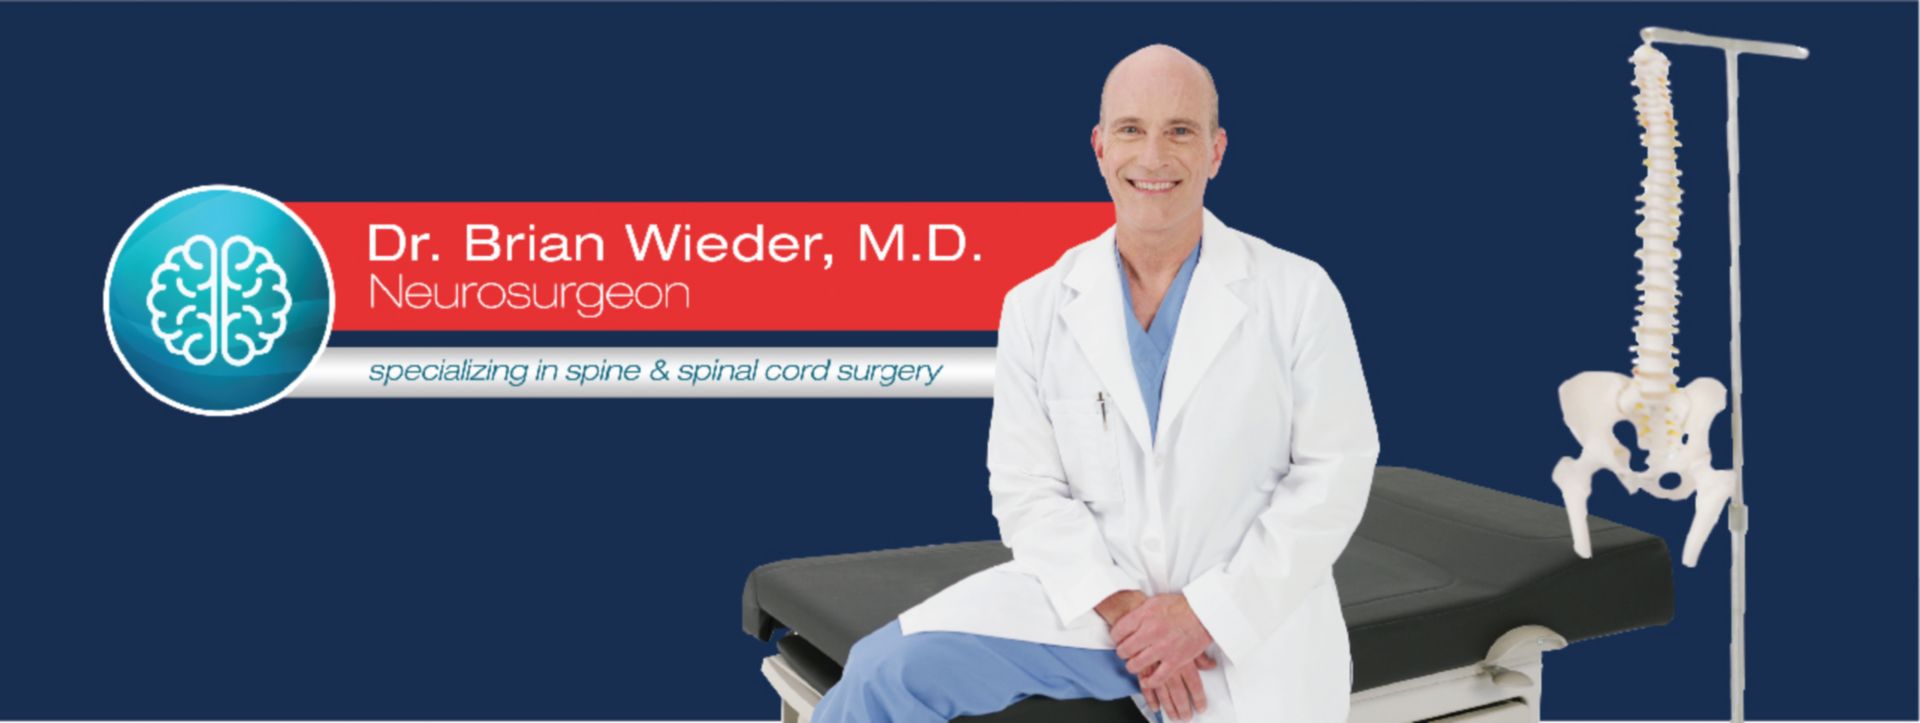 Dr. Brian Wieder, M.D.